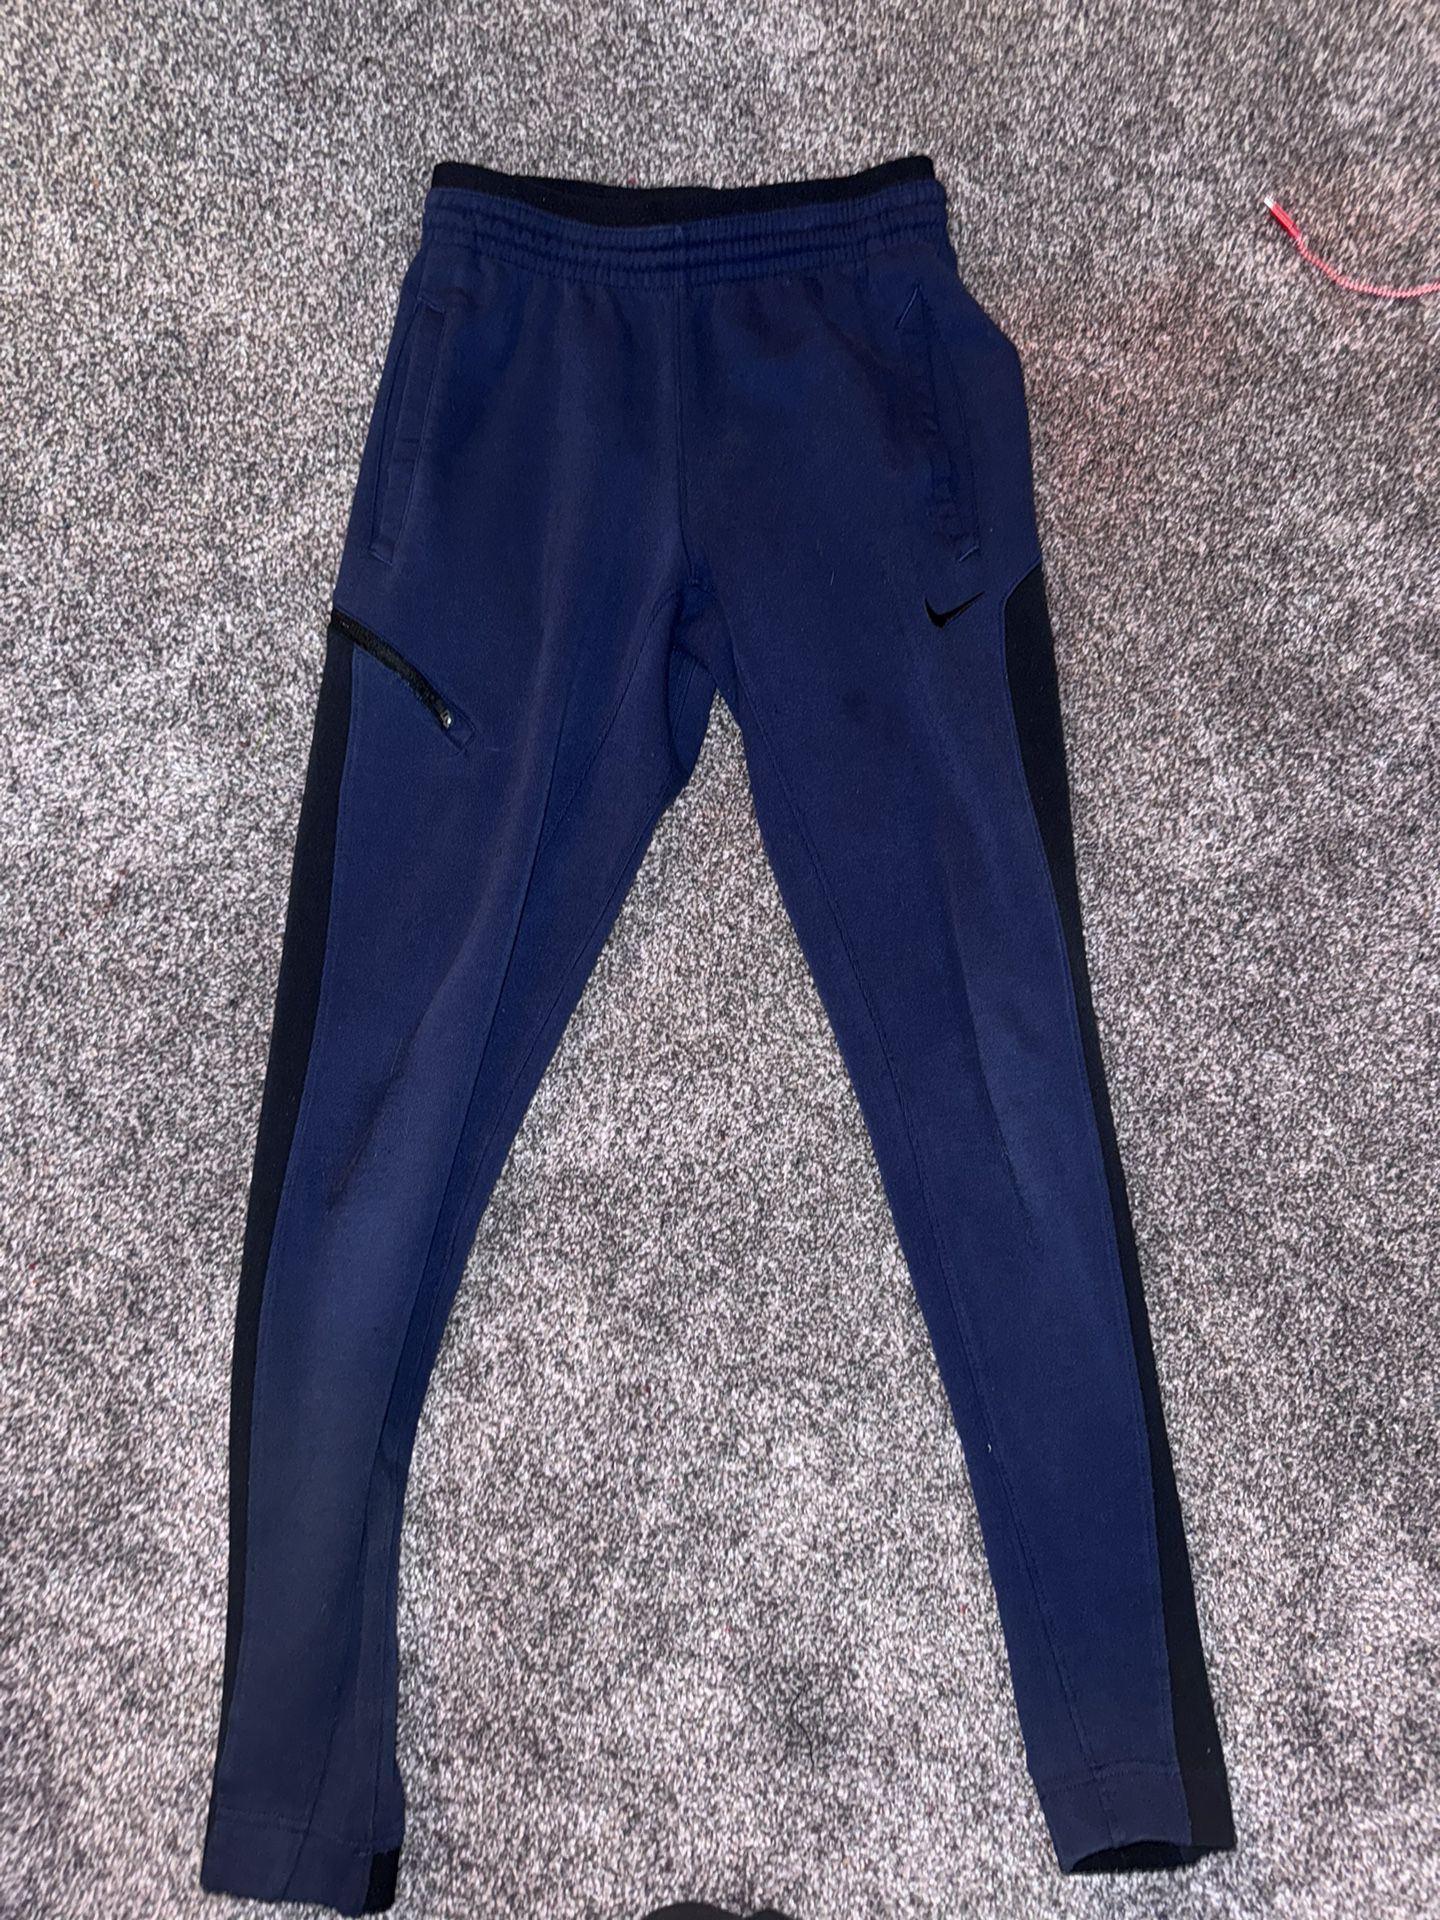 Men’s Nike Navy Blue Sweatpants 